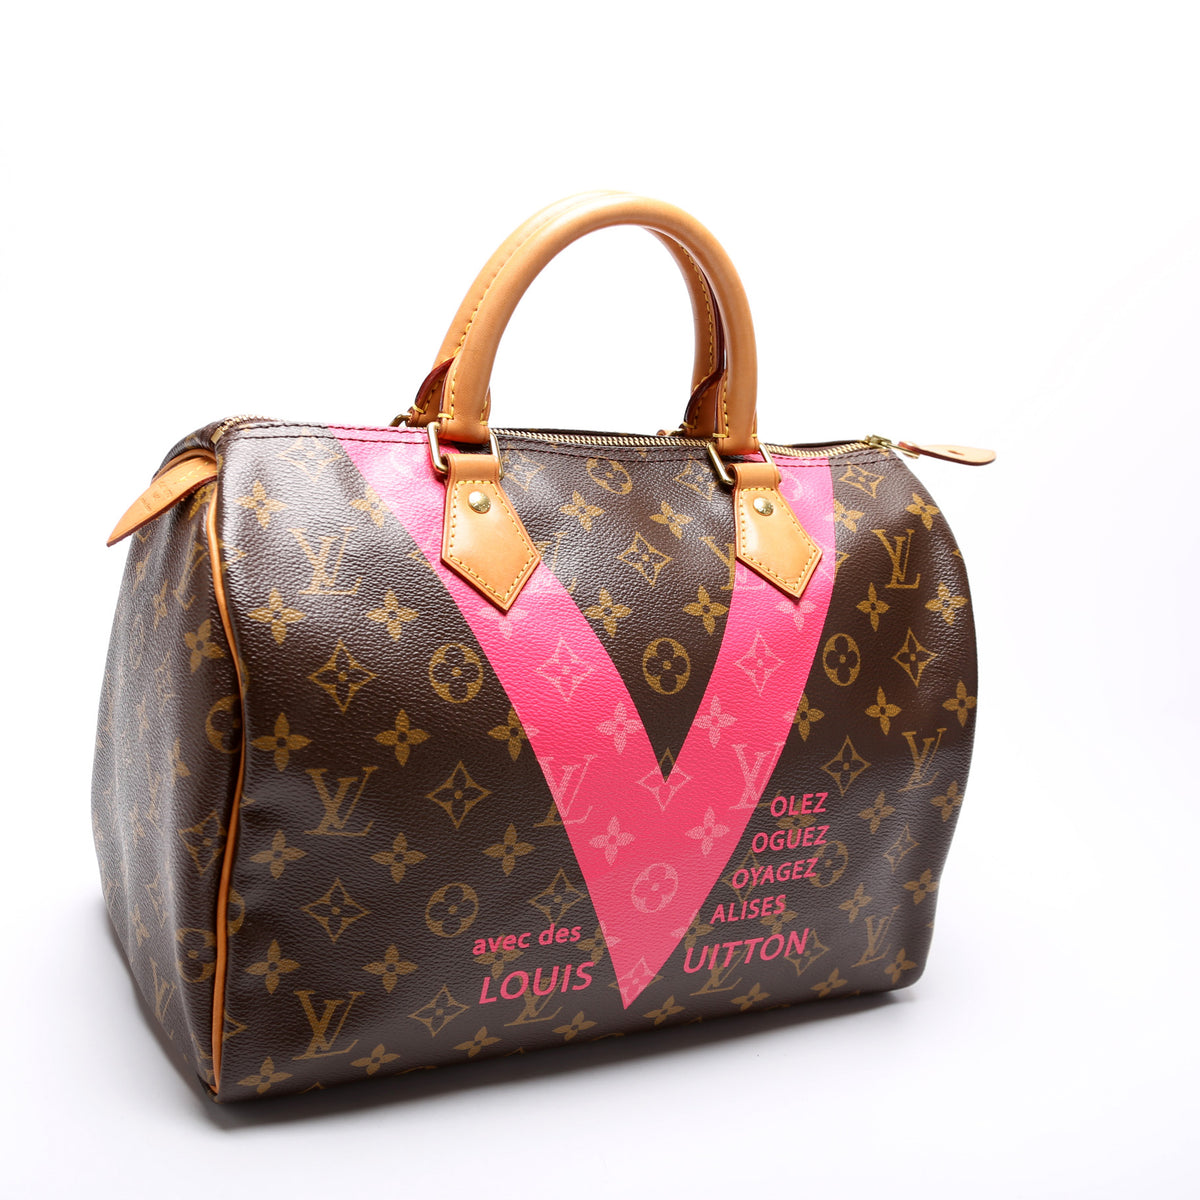 Iconic Louis Vuitton Speedy 30 Handbag Limited Edition Grenade V